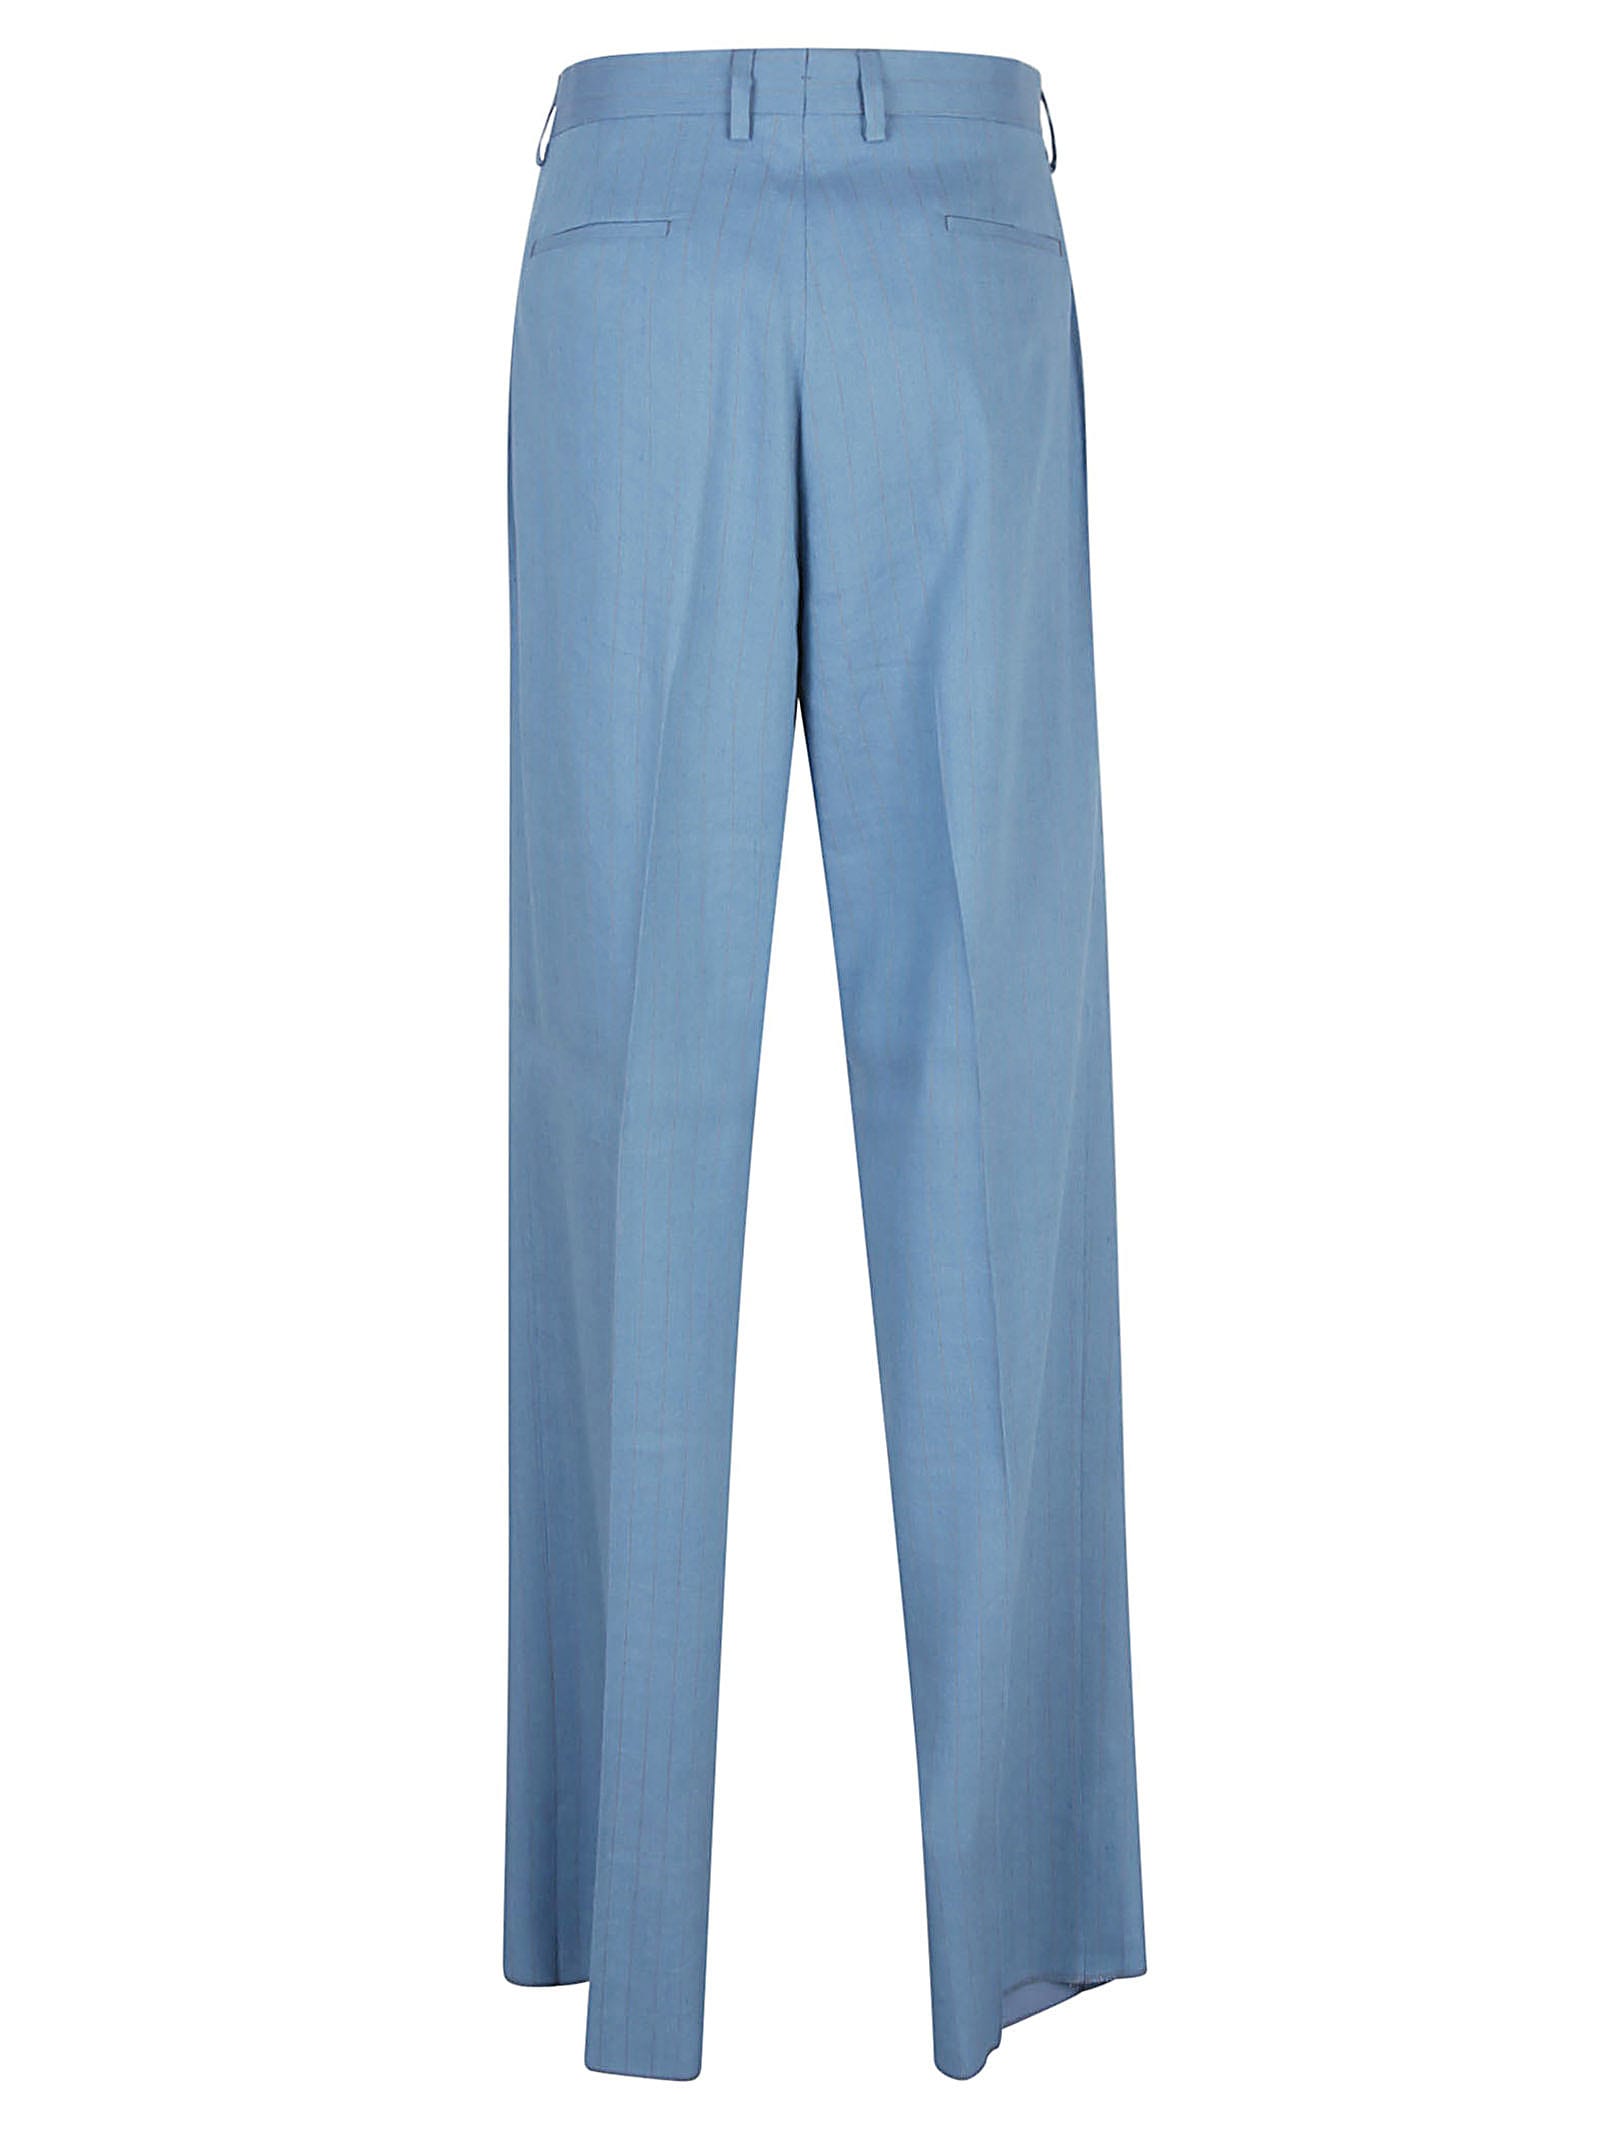 Shop Saulina Milano Saulina Trousers Clear Blue